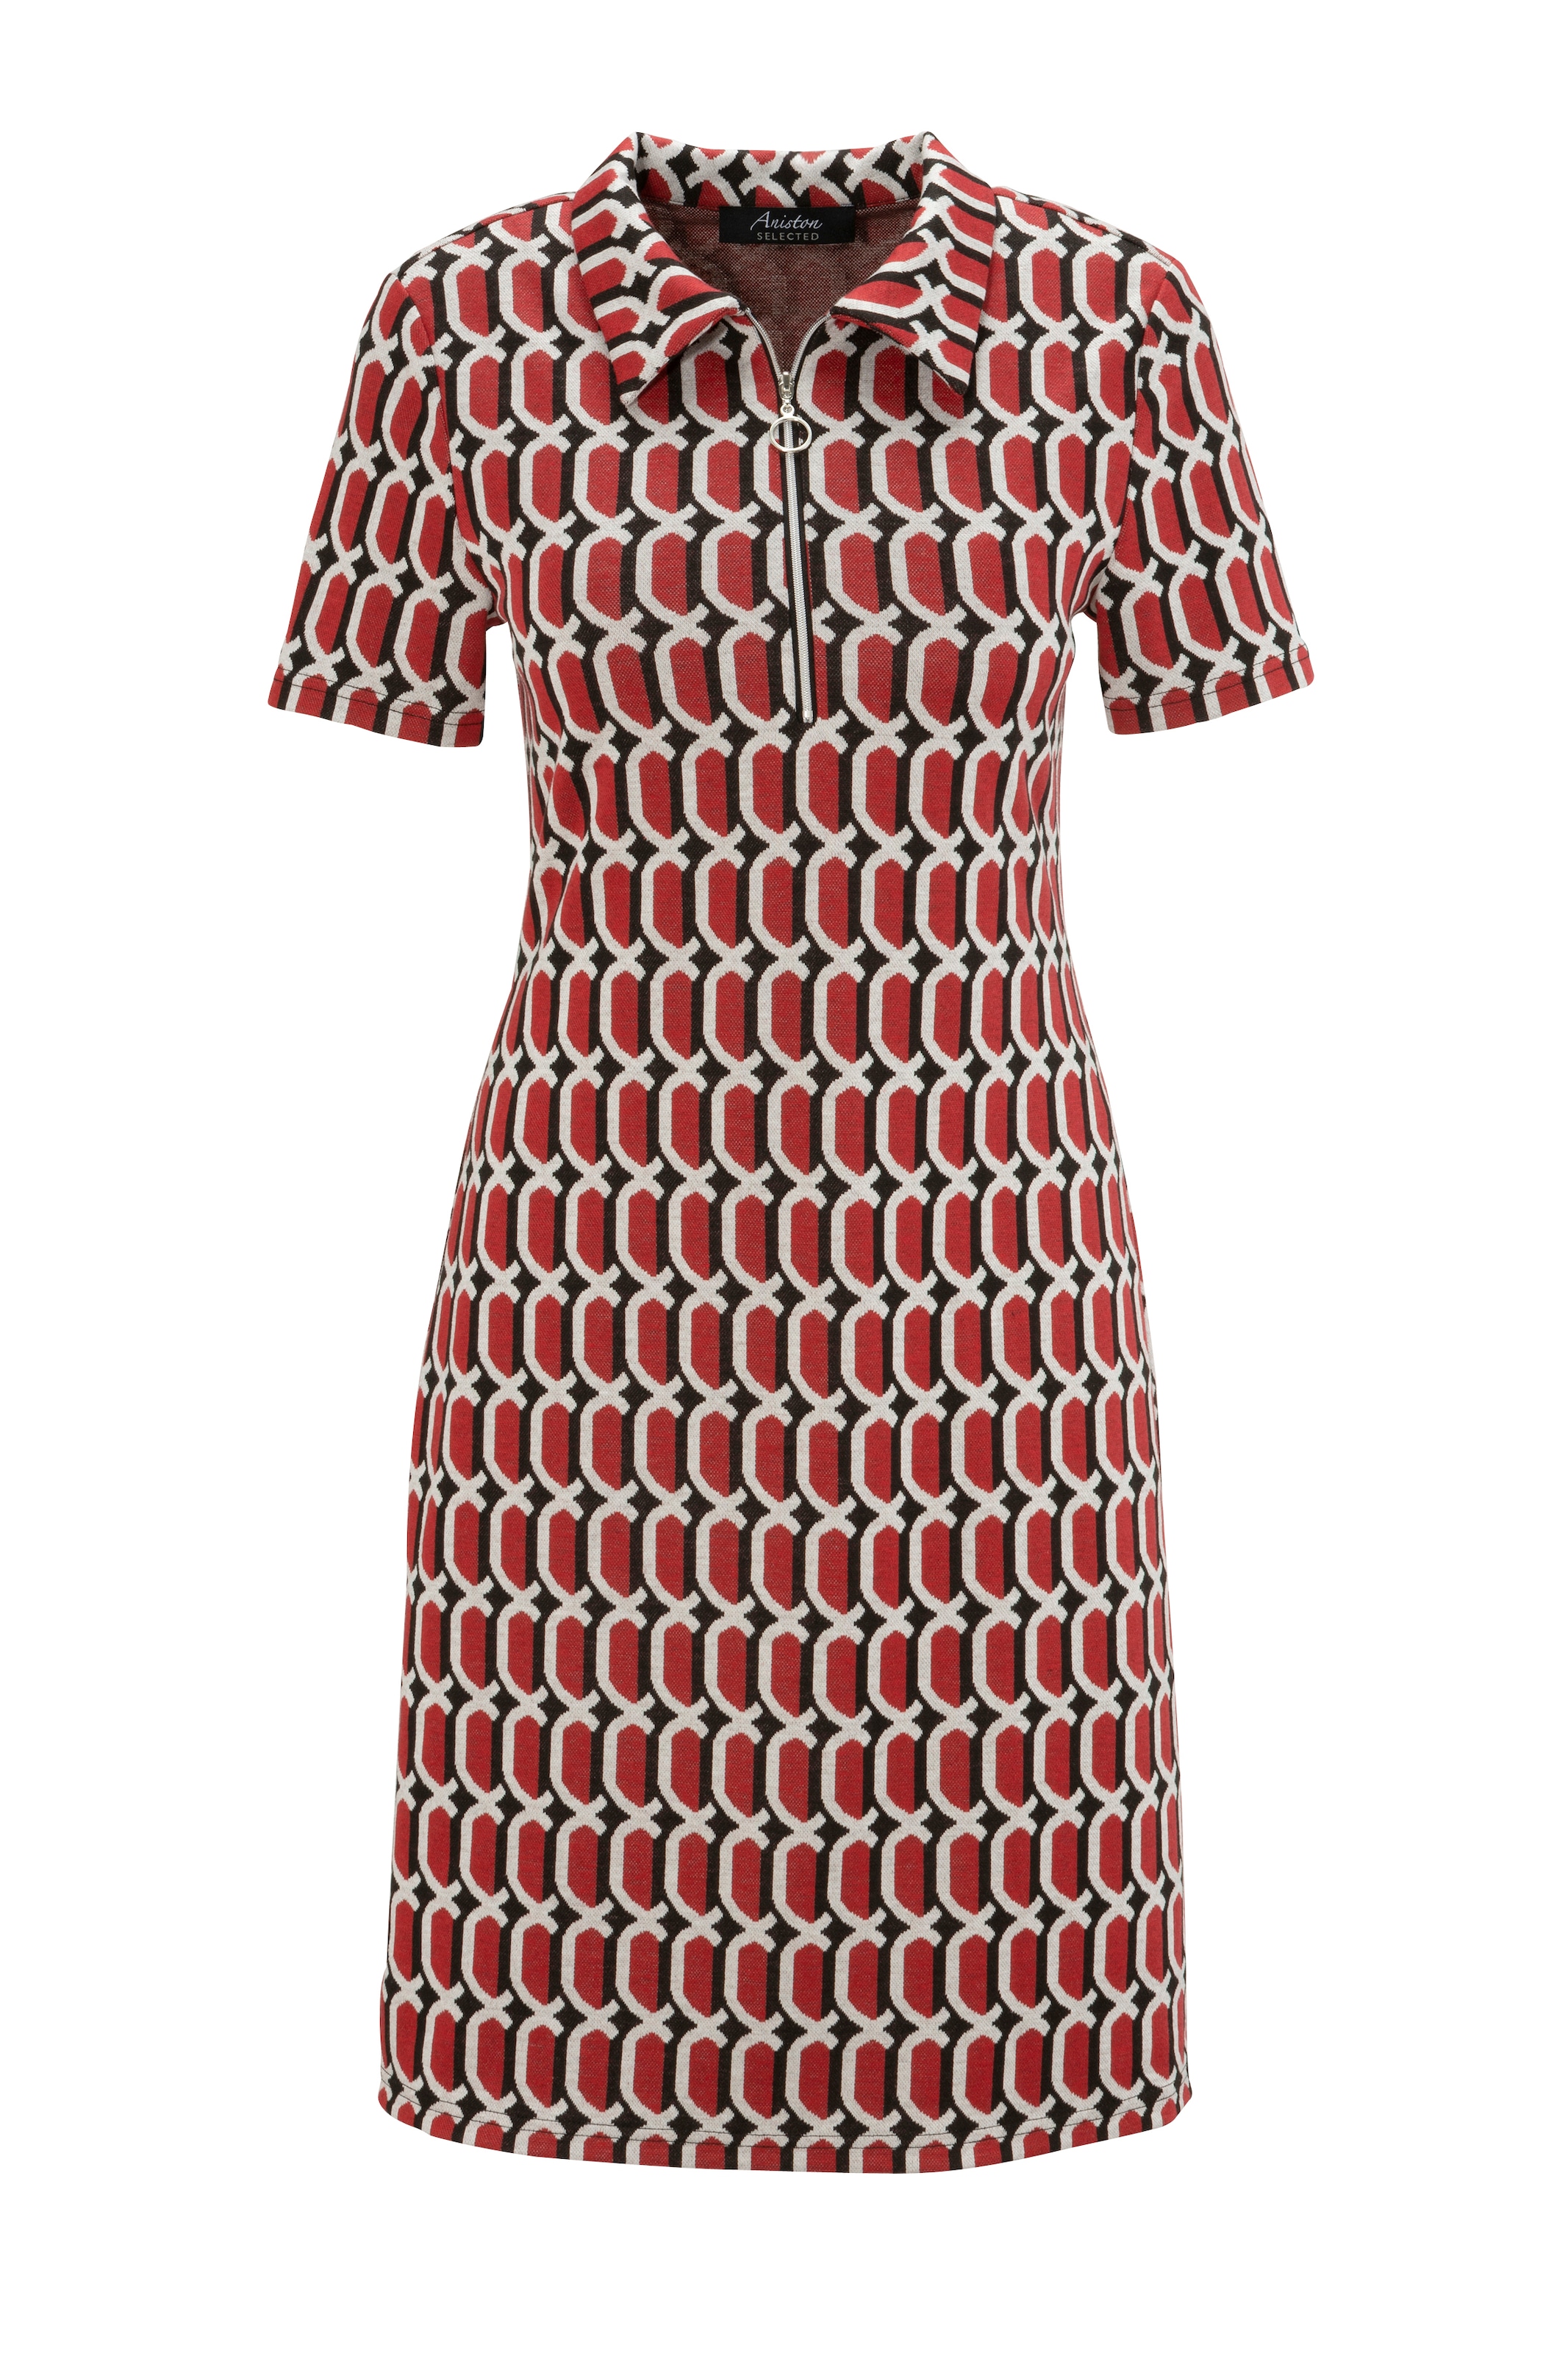 Aniston SELECTED Jerseykleid, mit kaufen KOLLEKTION NEUE - Reißverschluss silberfarbenem